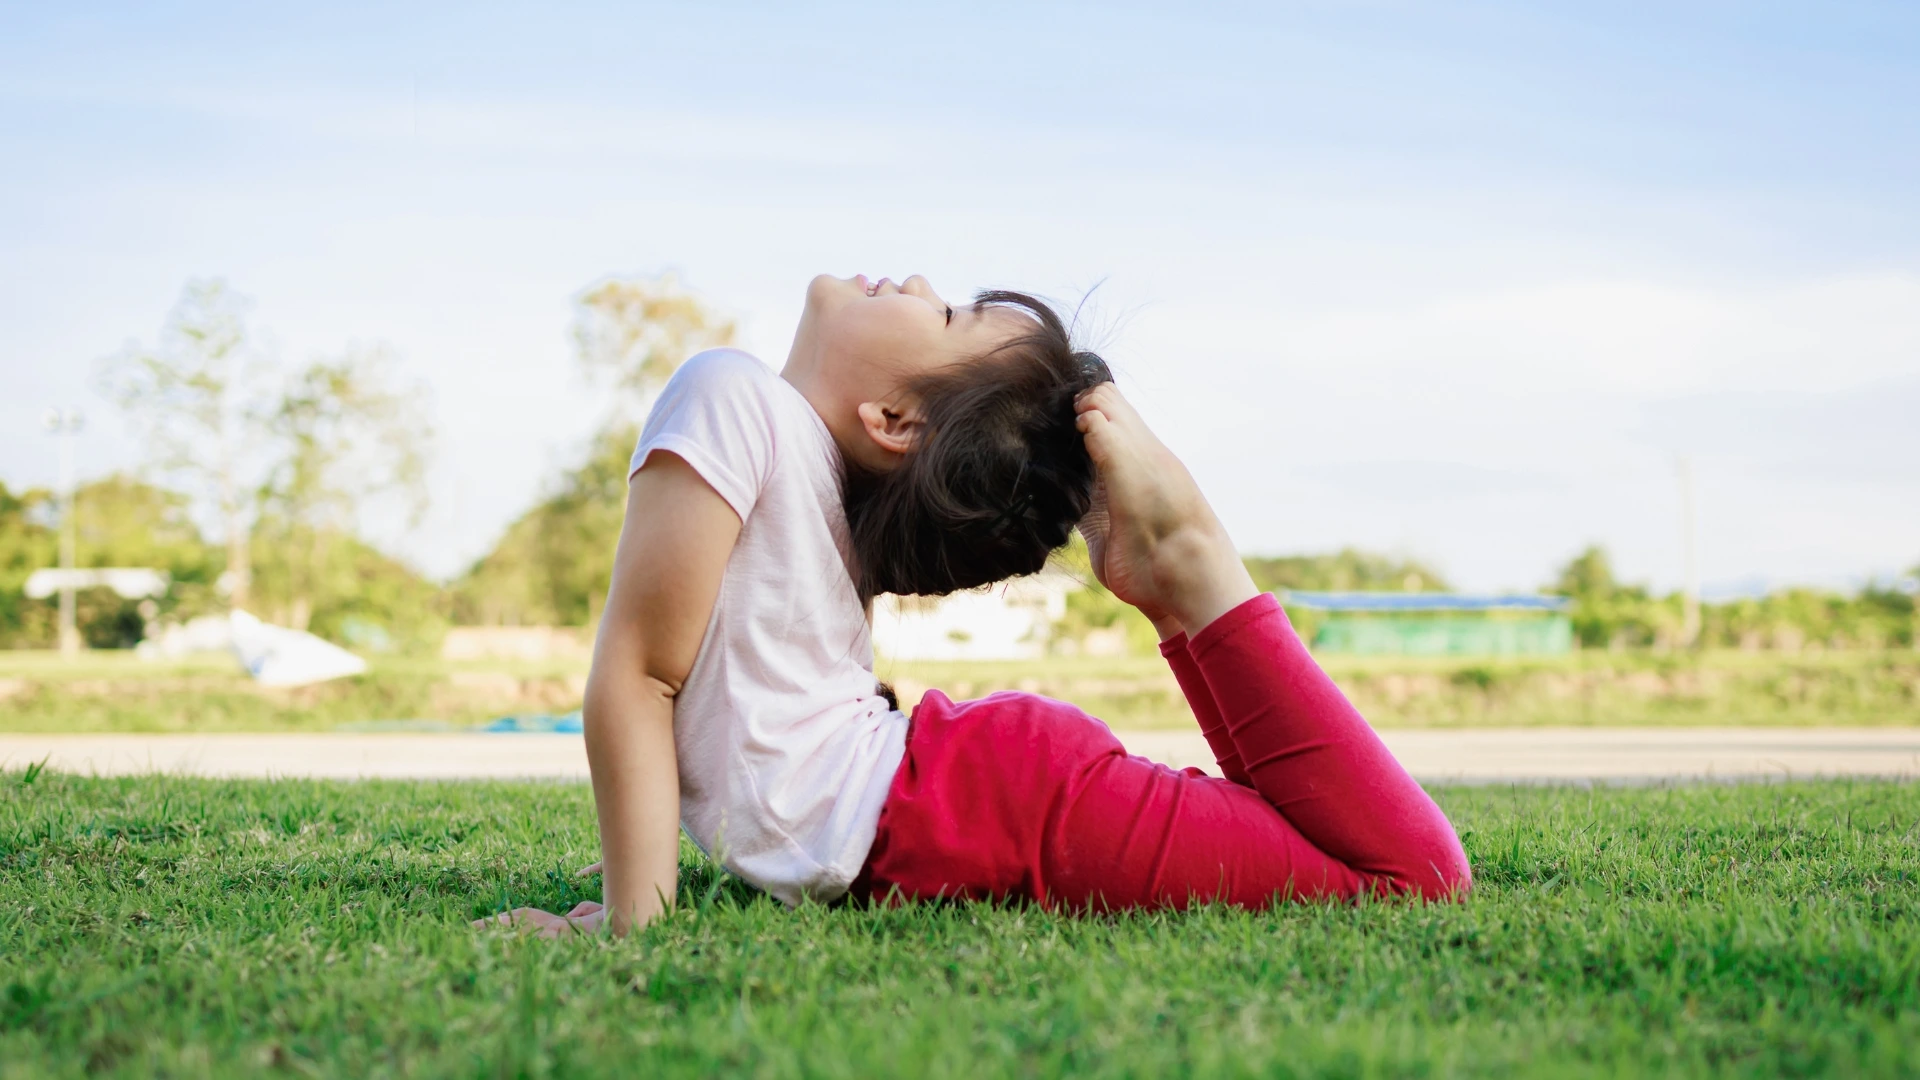 Do Kids Enjoy Yoga?